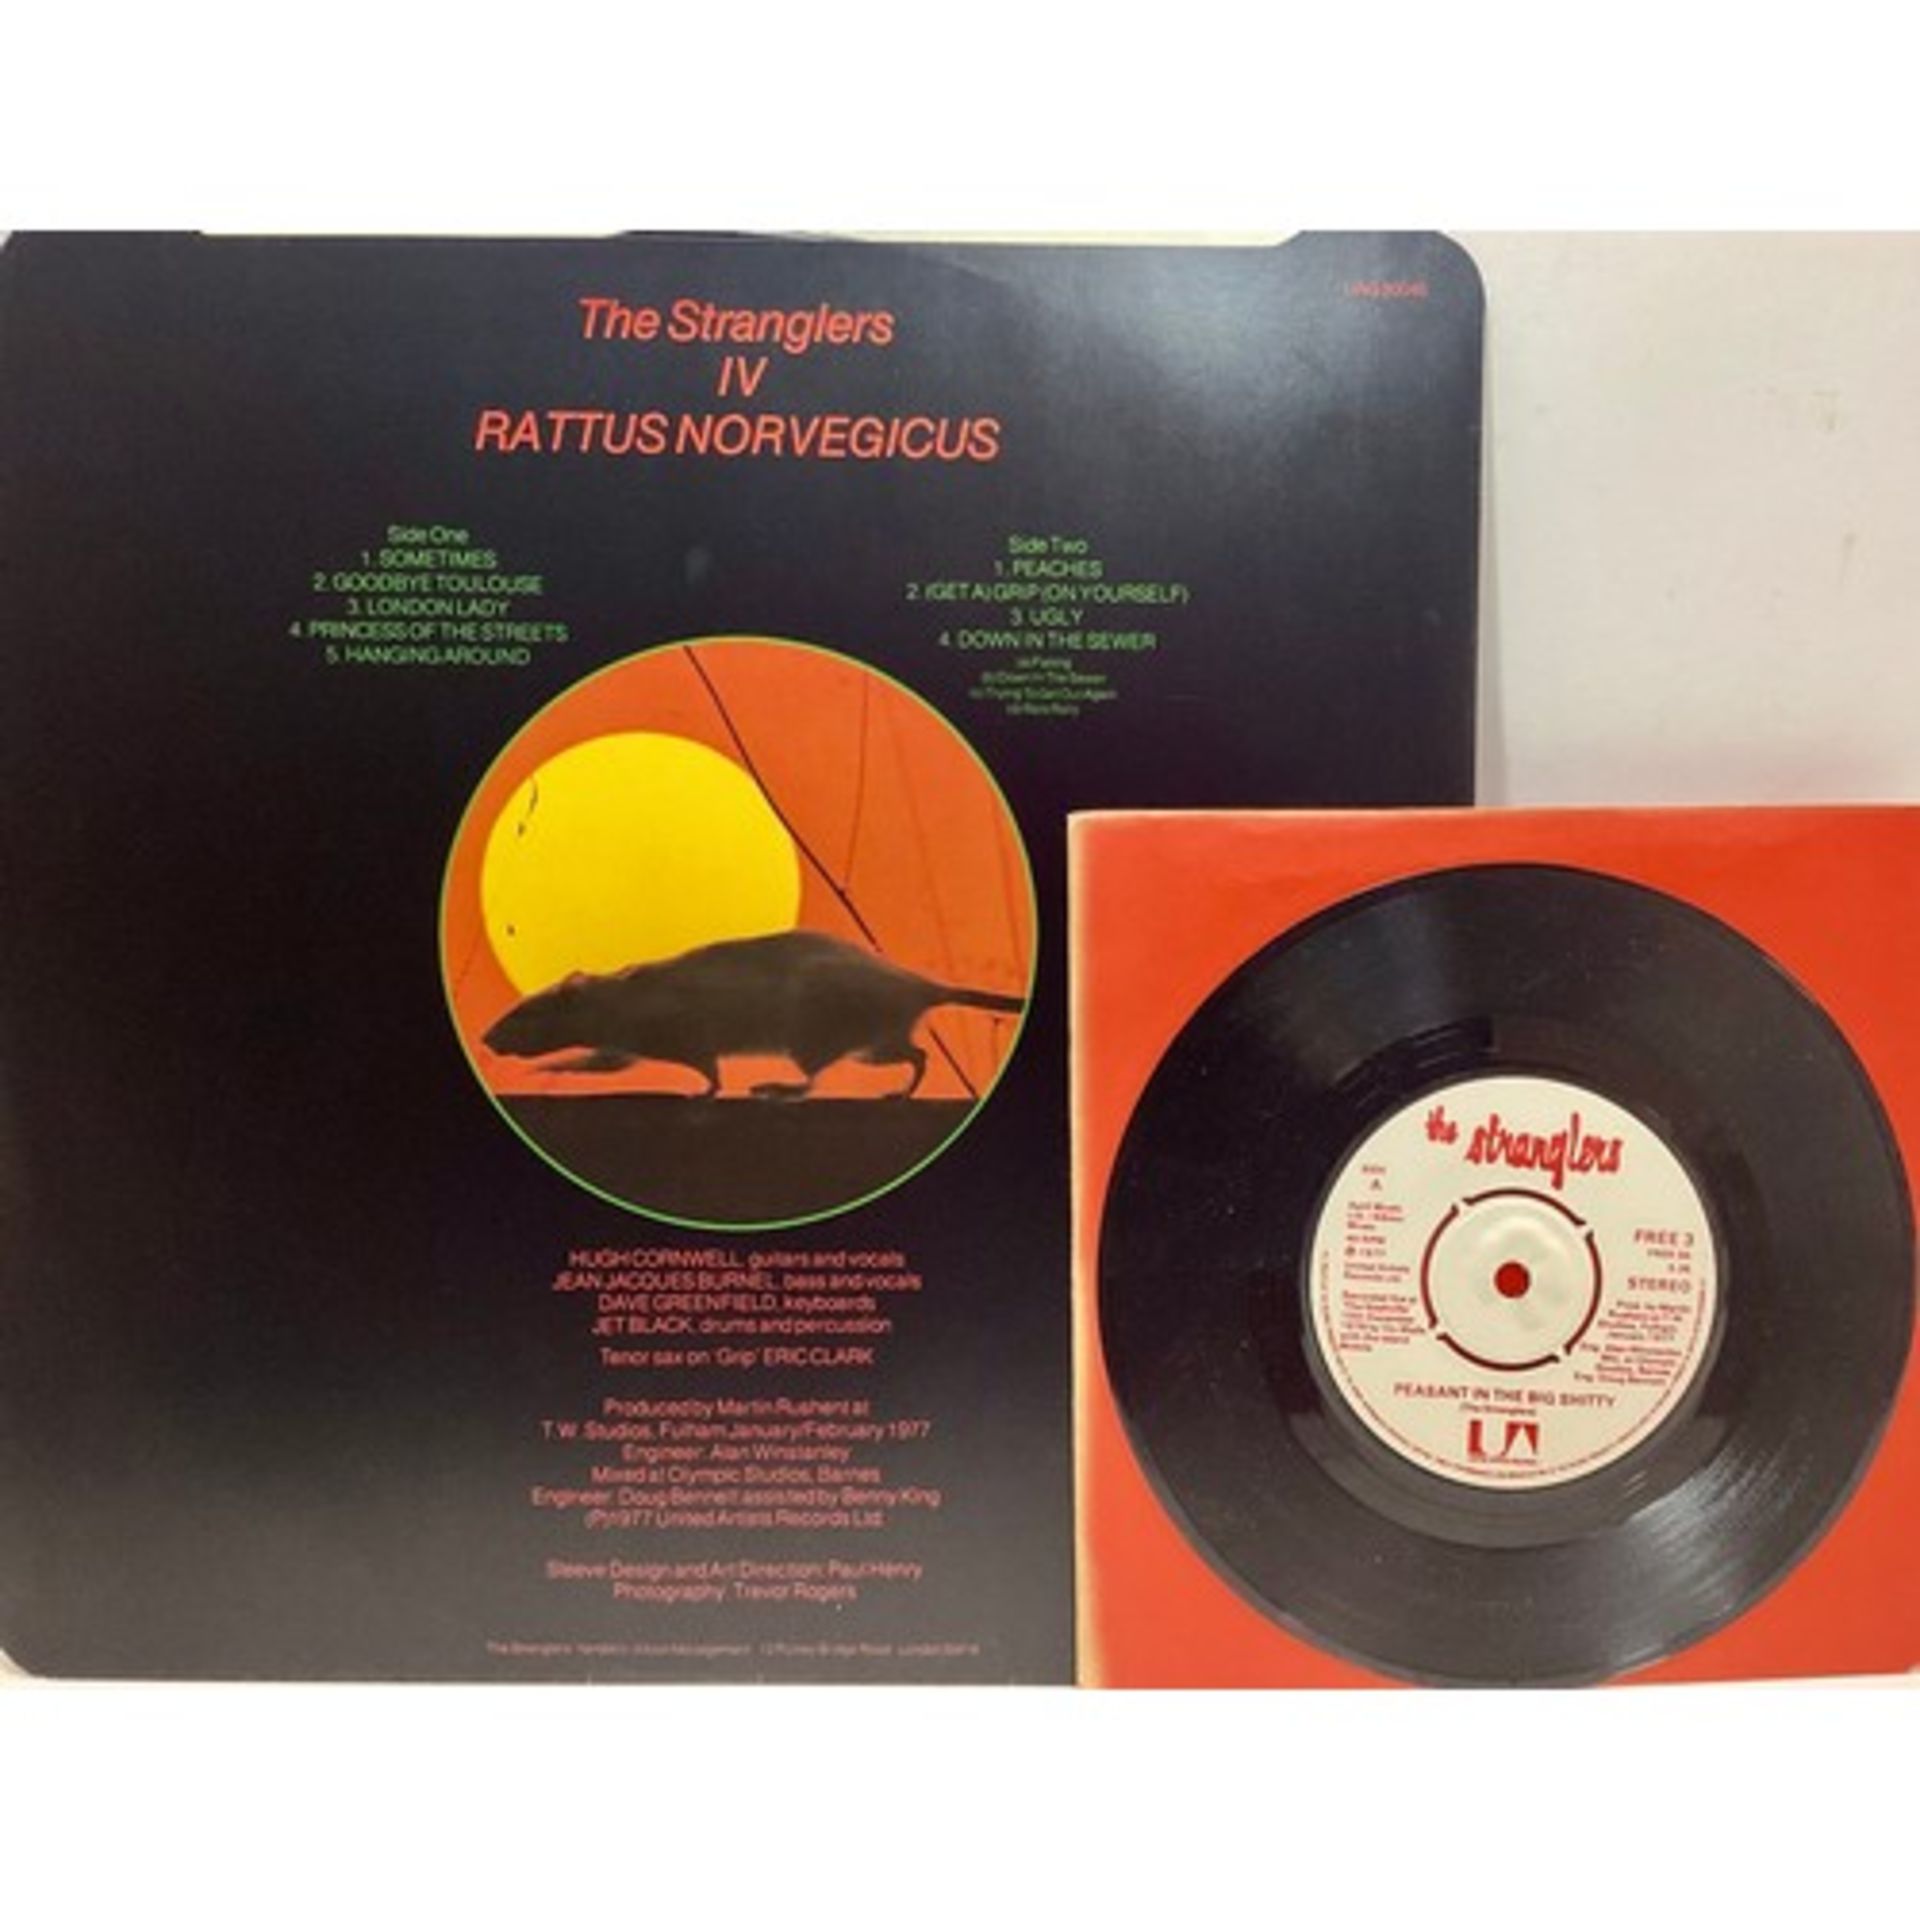 THE STRANGLERS VINYL LP RECORDS X 2. - Image 4 of 4